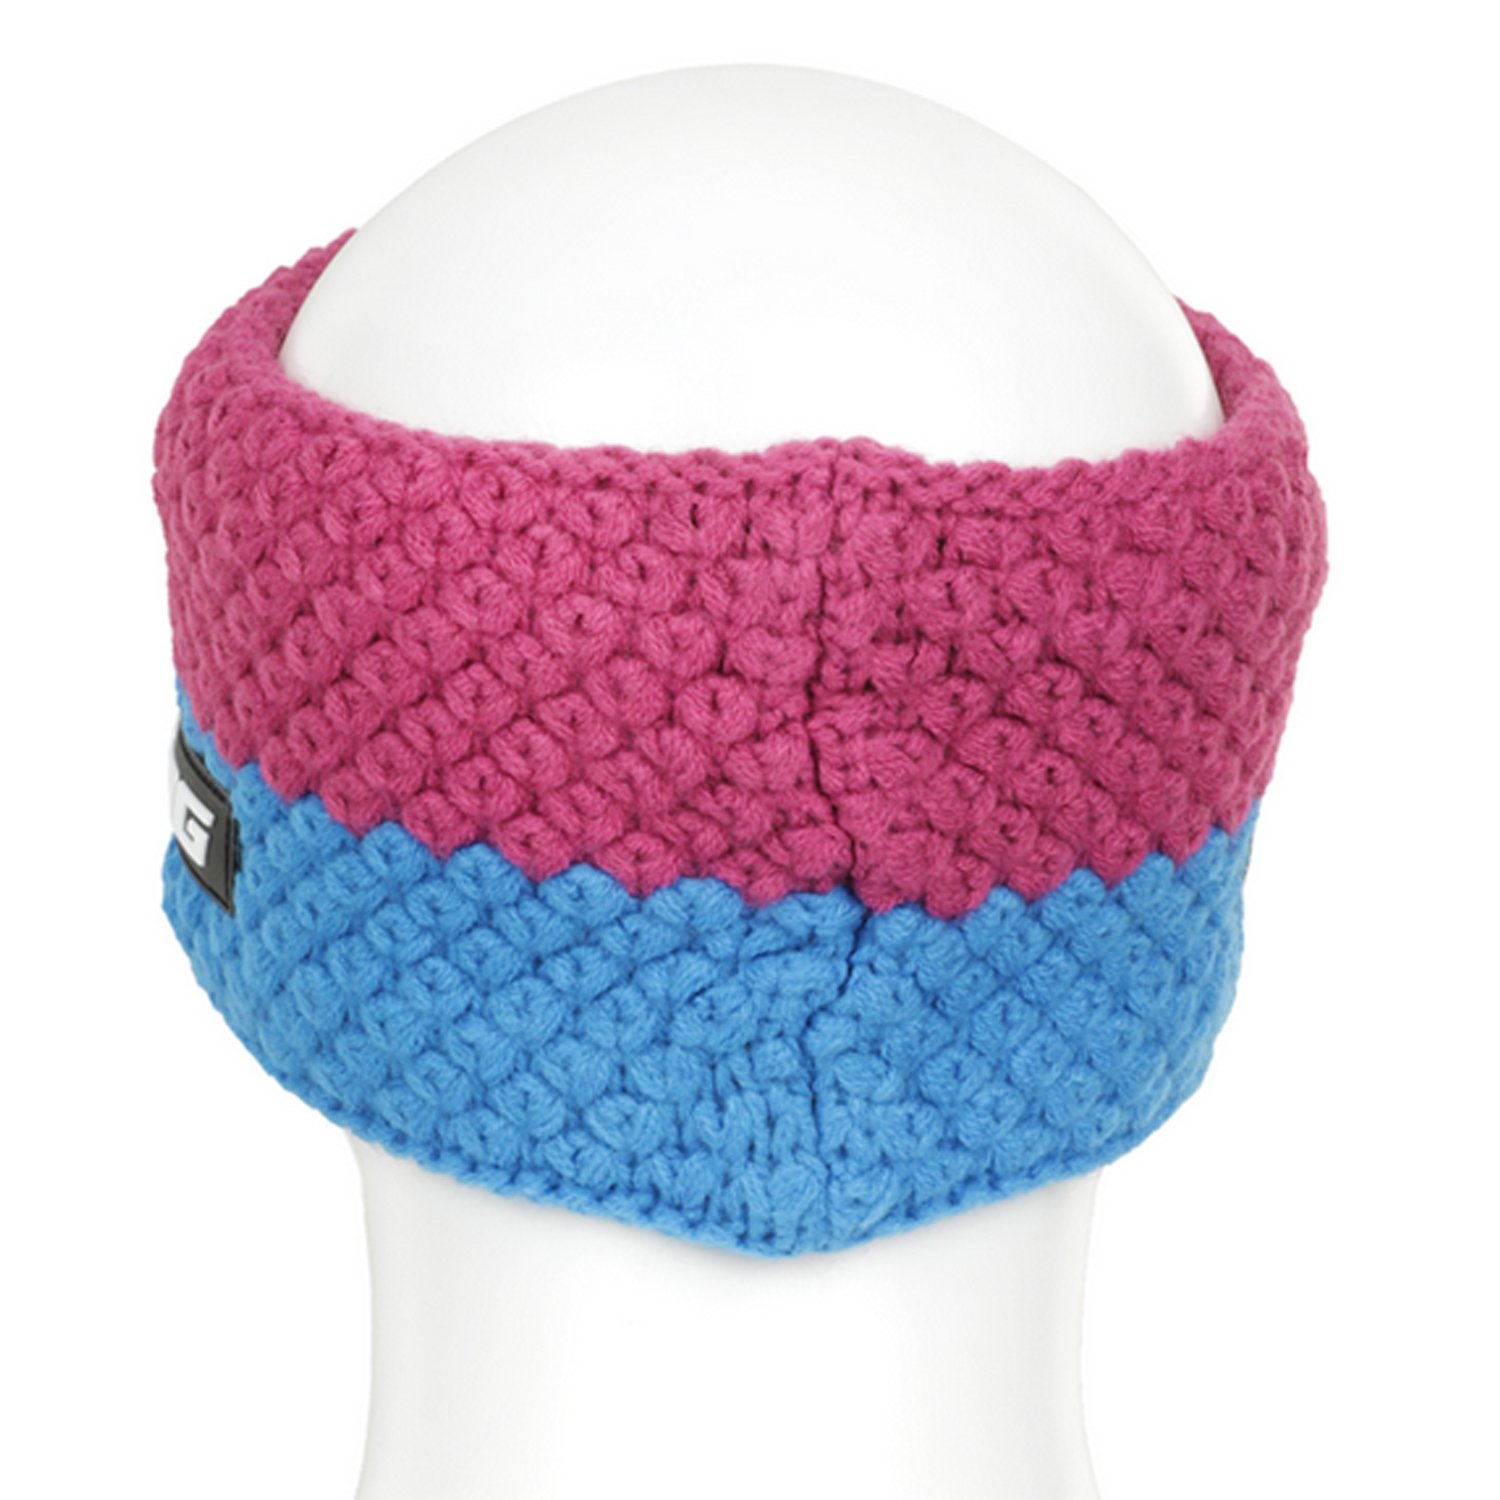 Повязка VIKING Headband Riddle Multicolour, US:one size, голубой/фиолетовый, 2022-23, 210/24/8752_1546, цвет разноцветная УТ-00334959 - фото 3